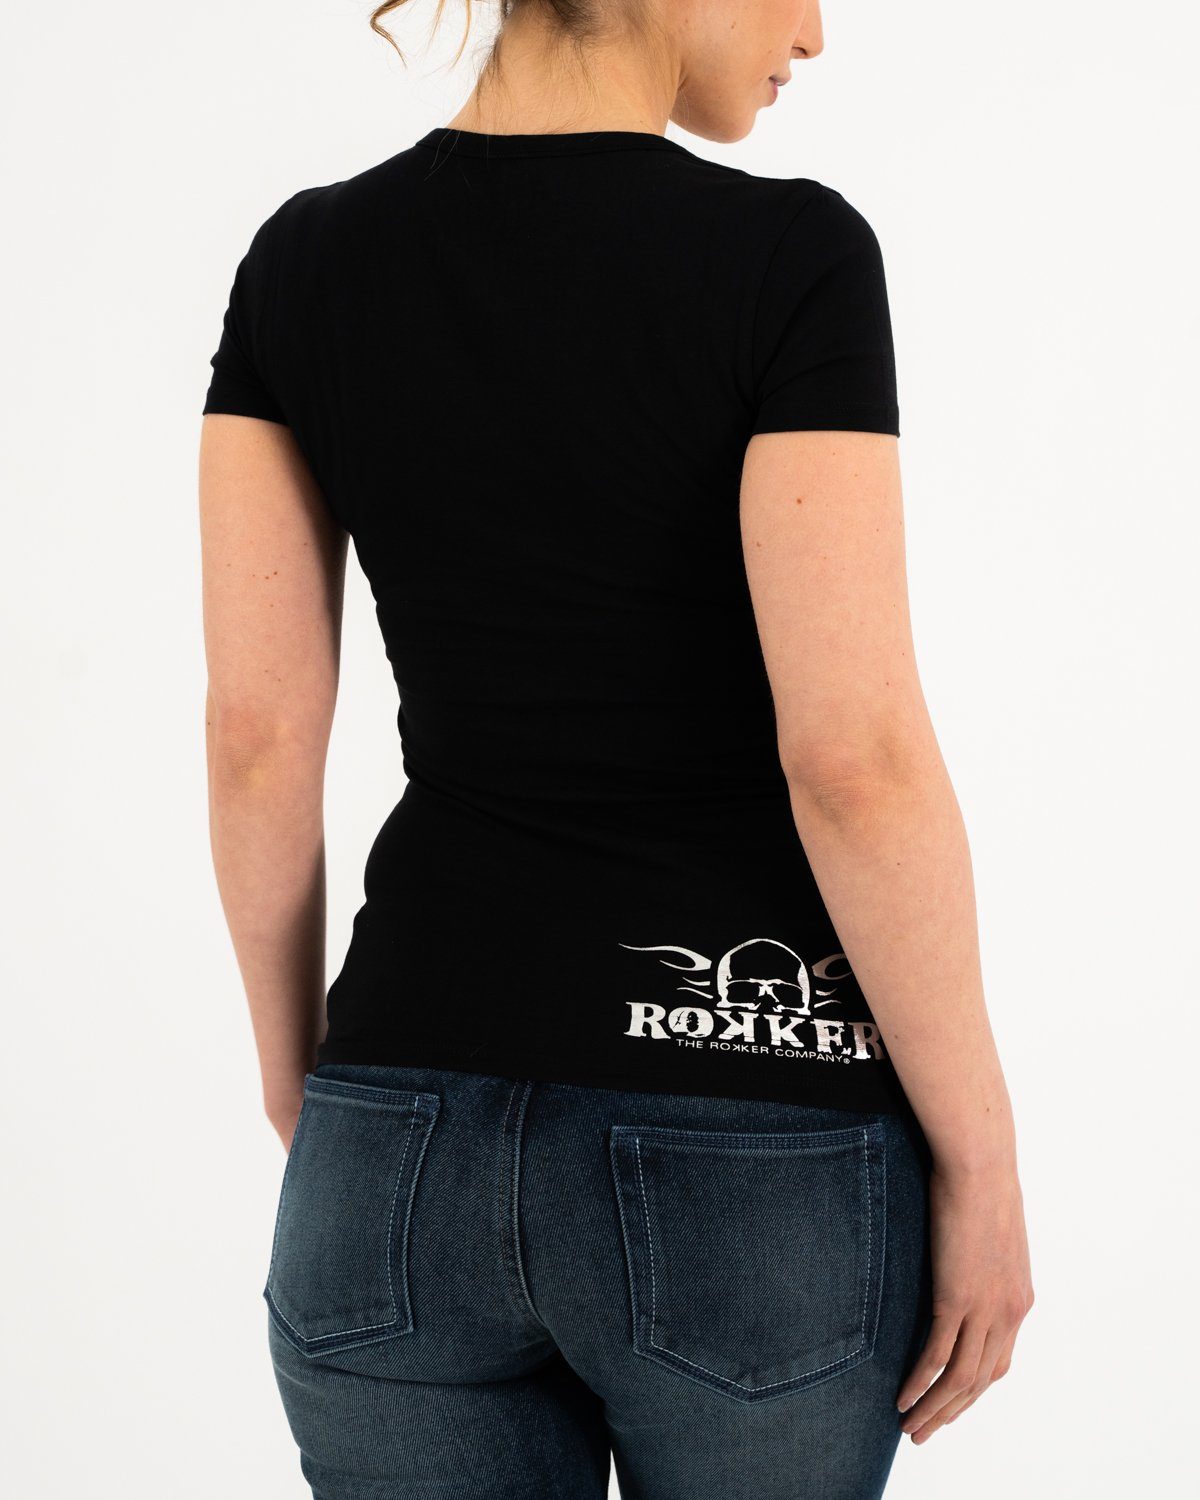 Lady Black T-Shirt T-Shirt The Rokker Company 